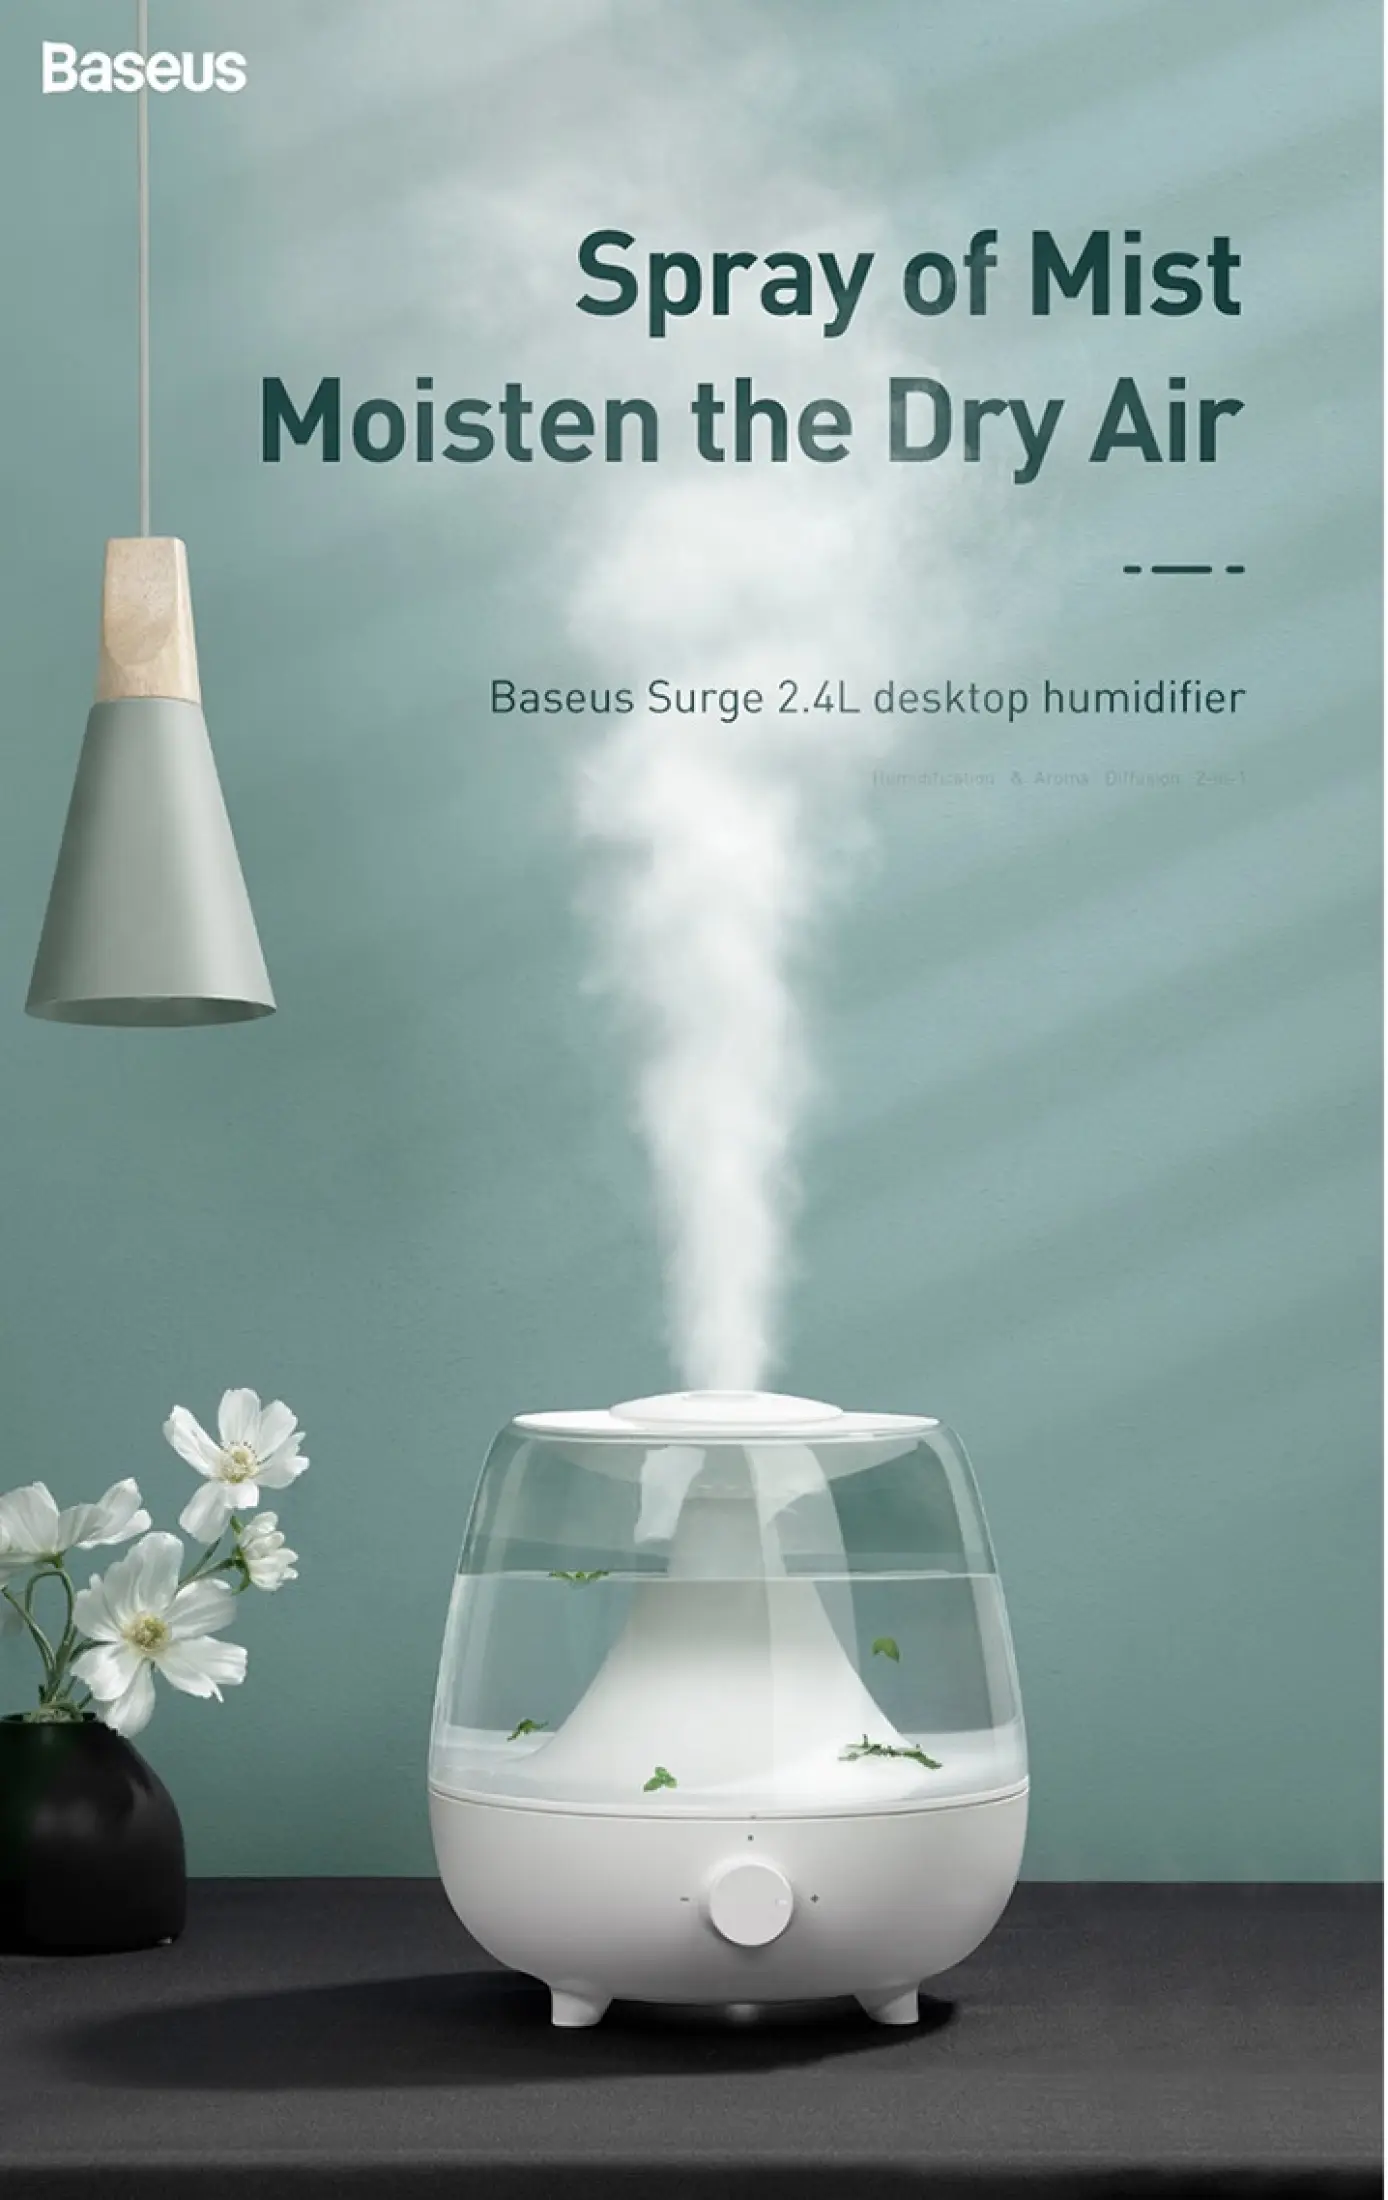 Baseus Surge Desktop Humidifier 2.4L Diffuser Aroma Mist Nebulizer buy online best price in pakistan